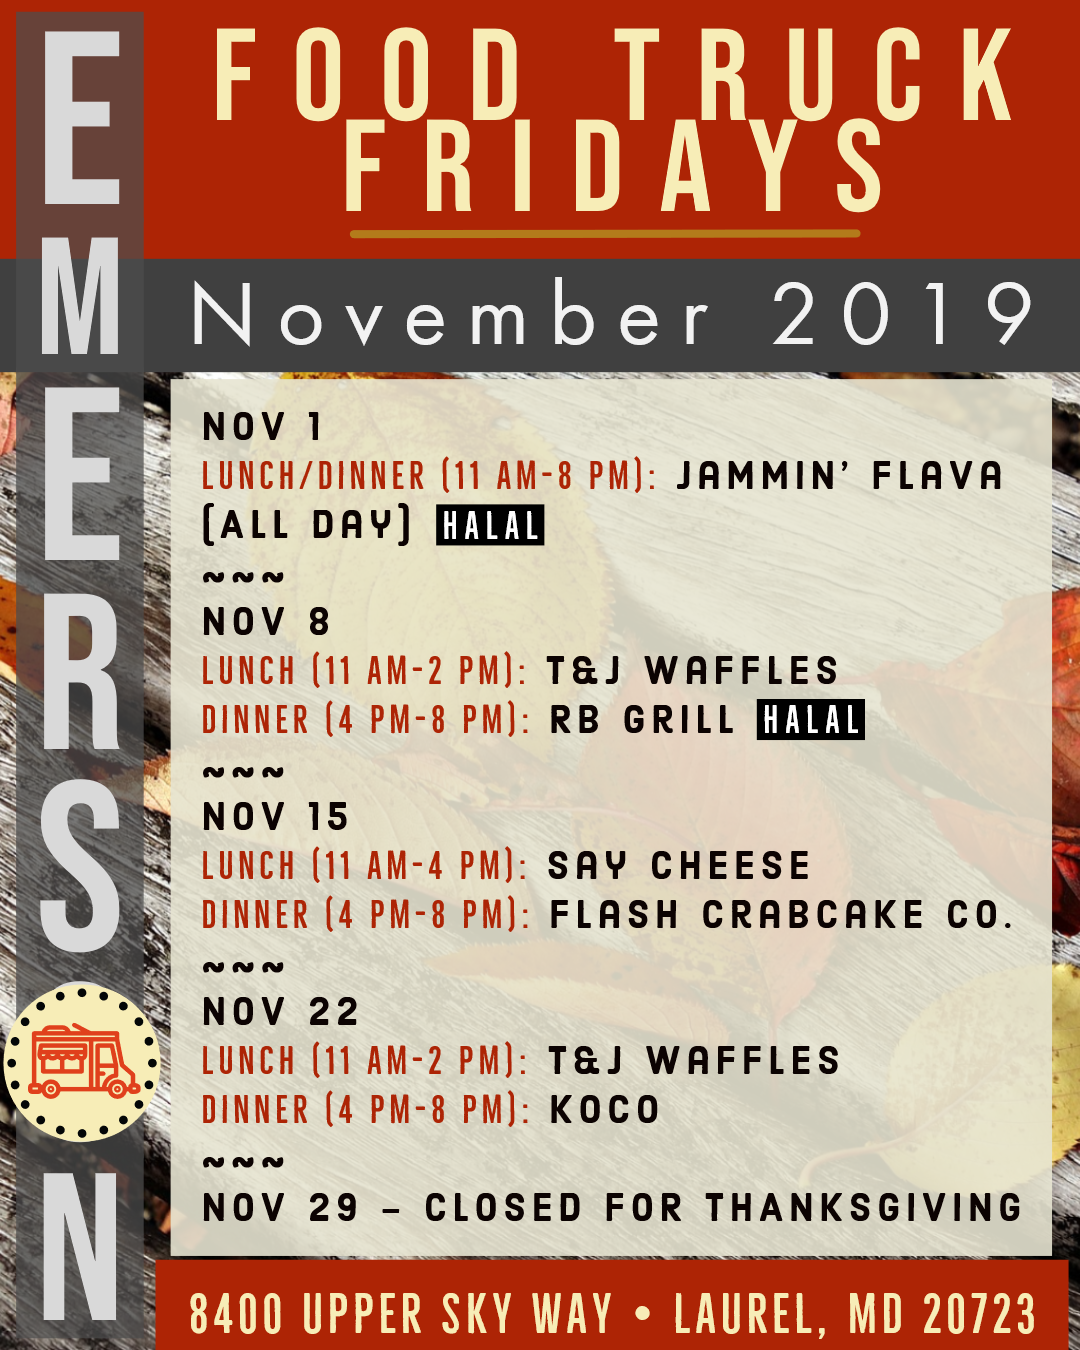 Emerson Food Truck Fridays - November 2019